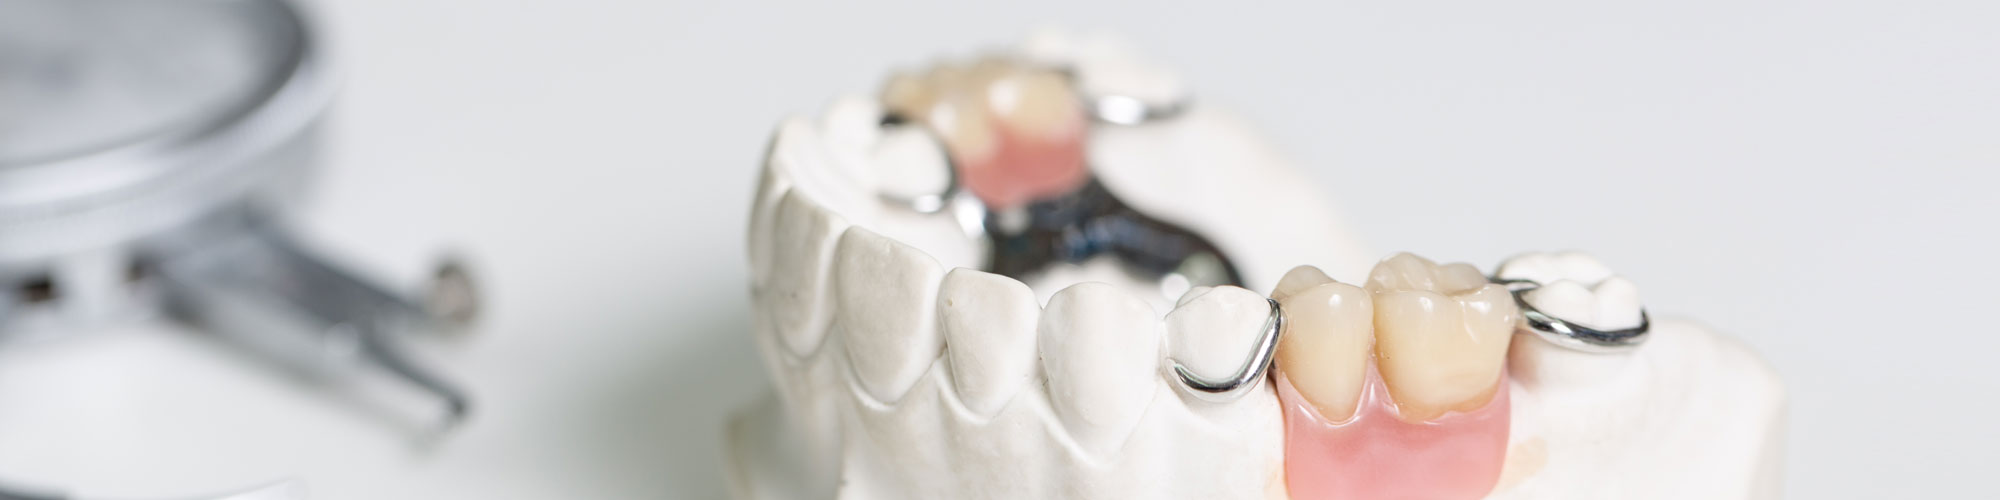 Dental Crowns and Bridges | Dental Crowns Cost